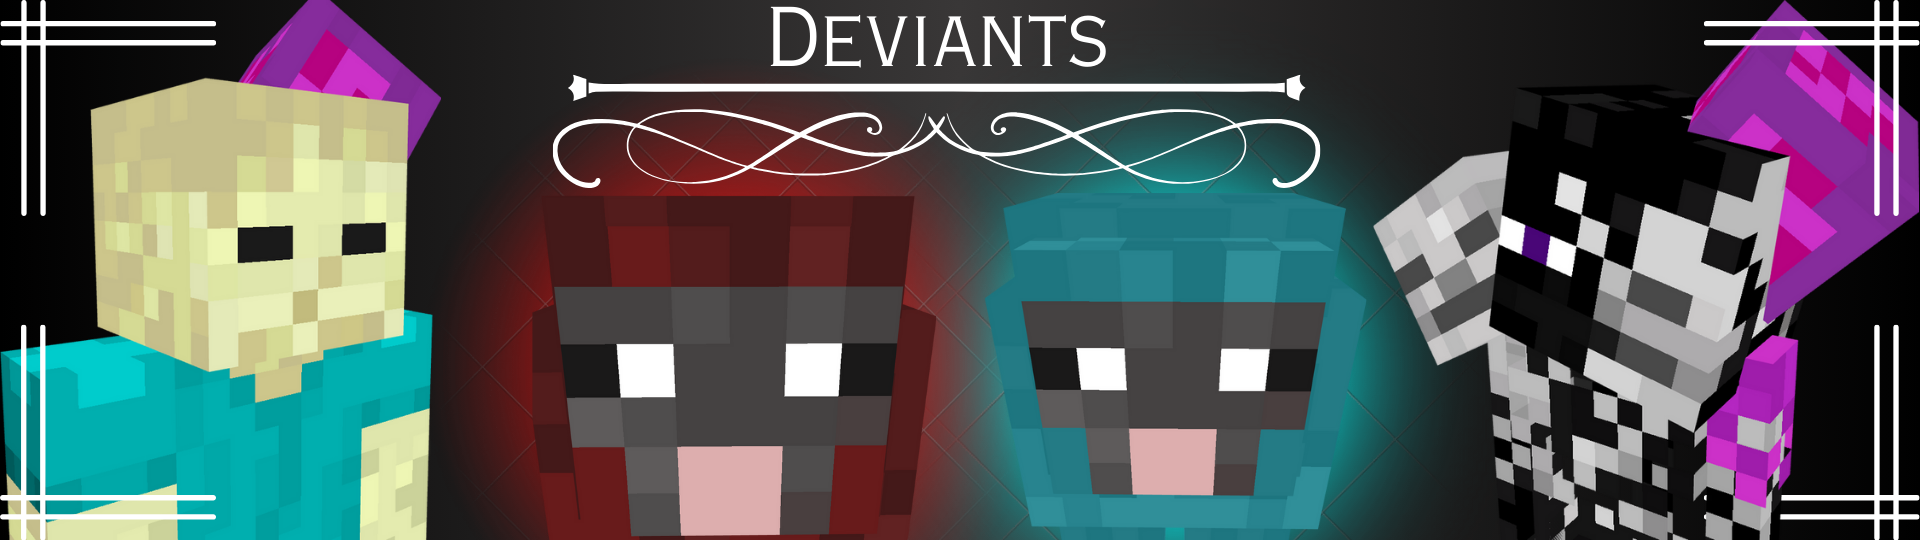 deviants banner